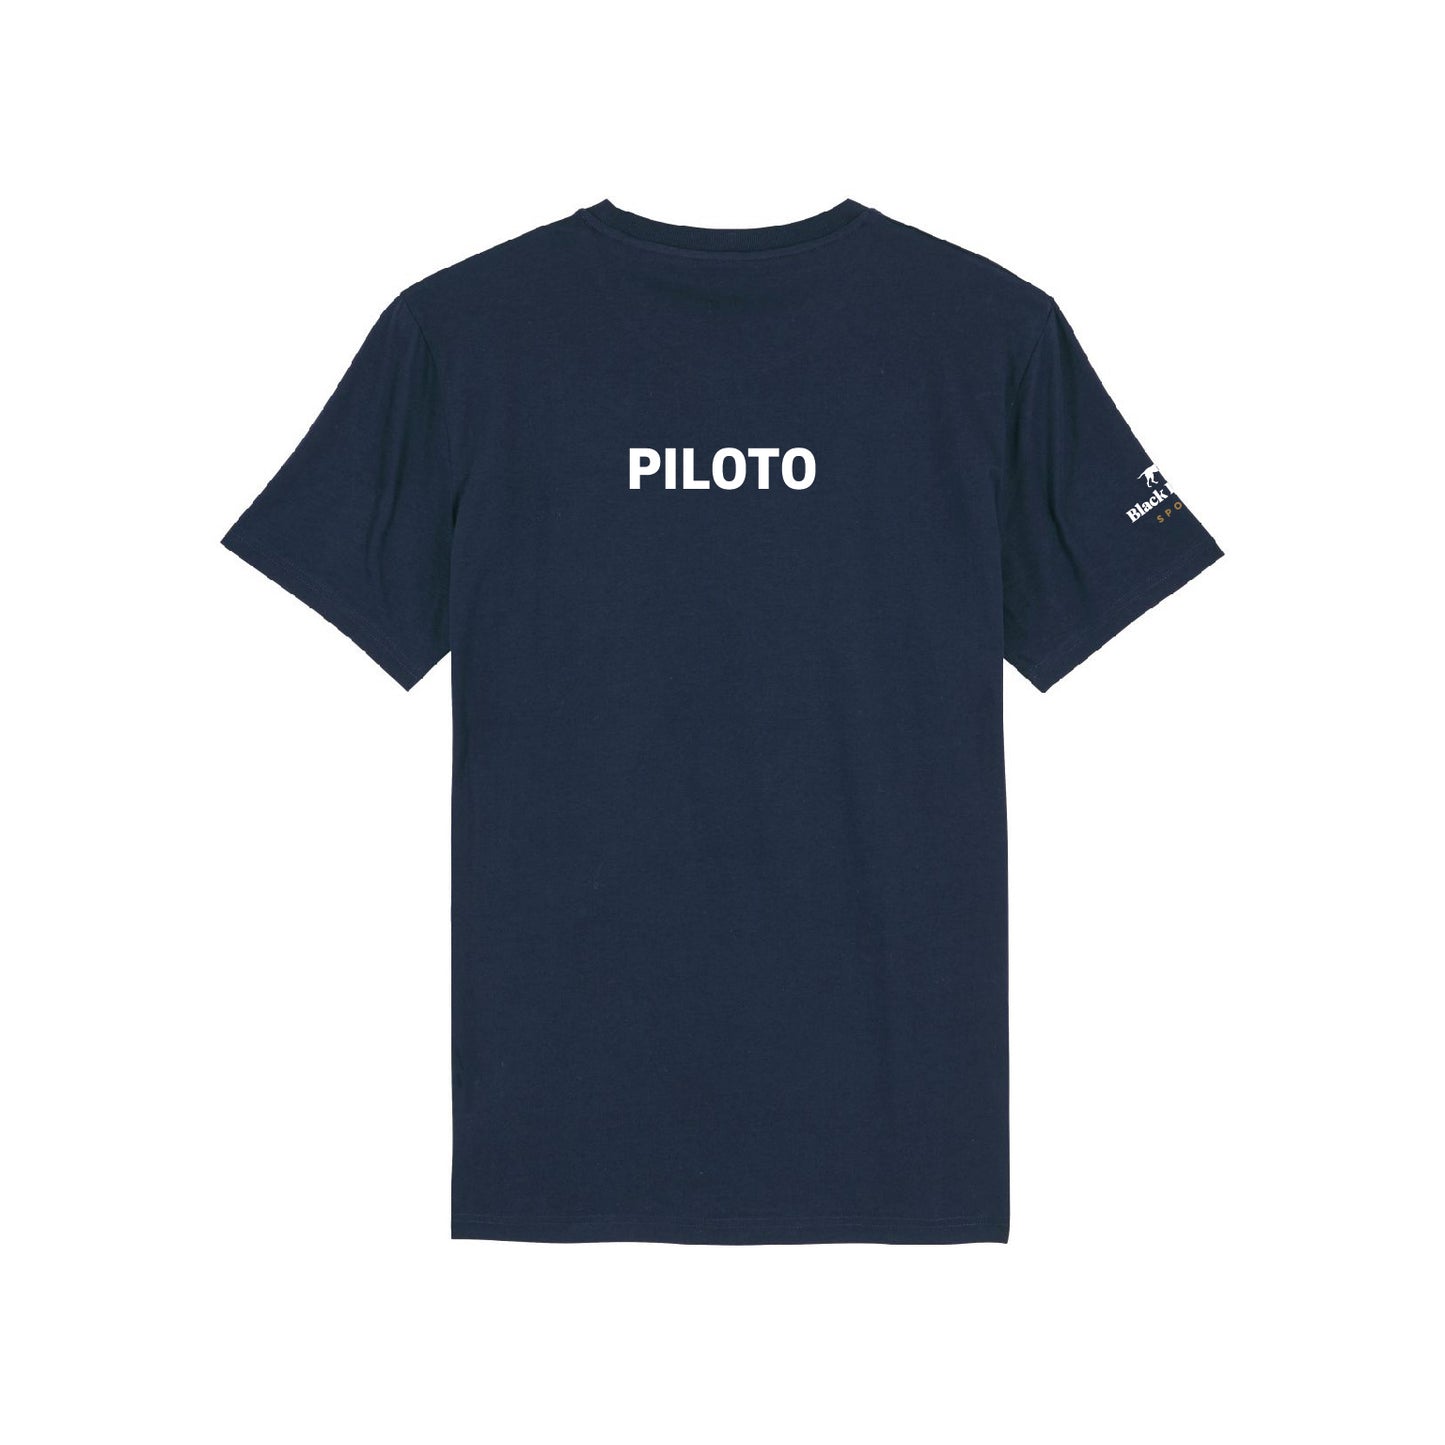 Lovelocks Polo Stud T-Shirt Piloto